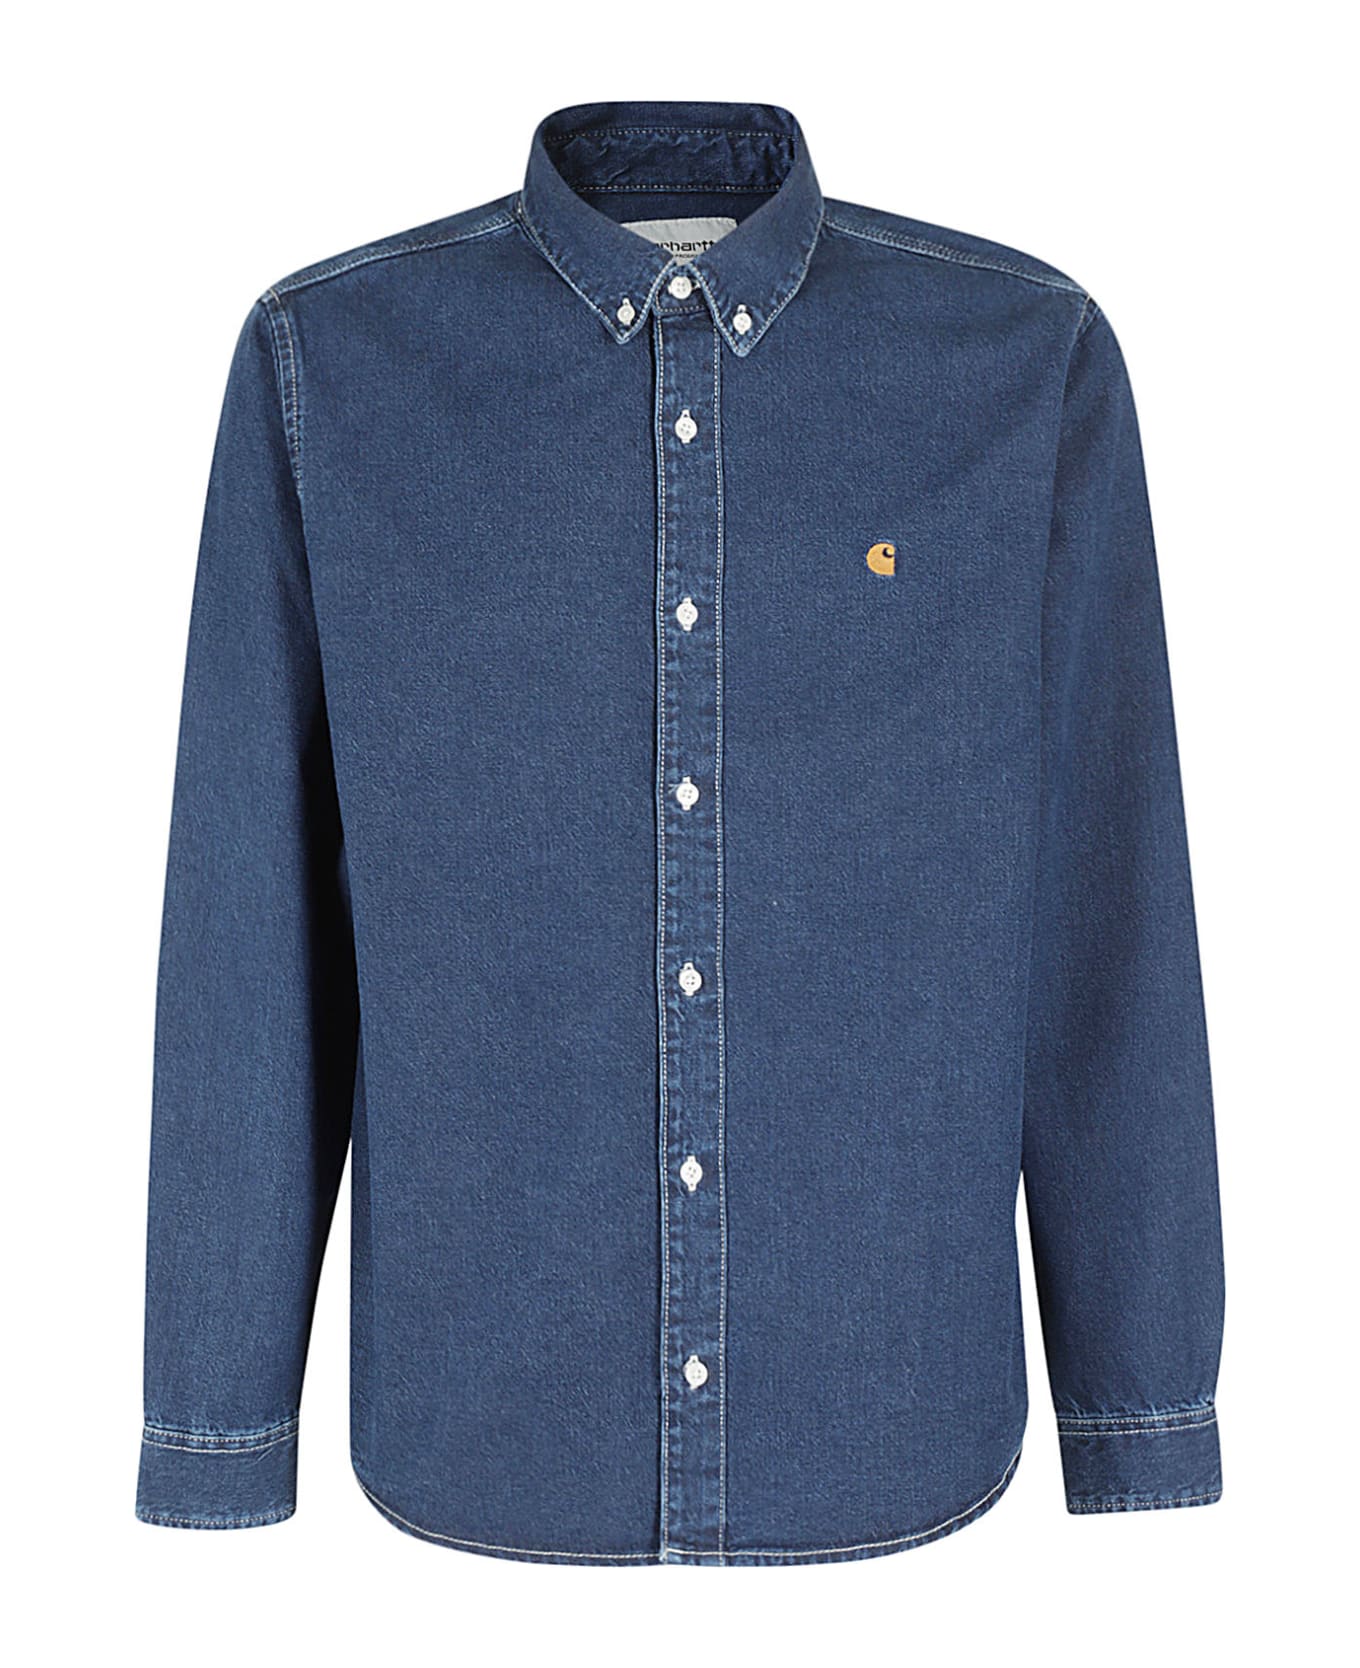 Carhartt 'l/s Weldon' Shirt - Blue Stone Washed シャツ